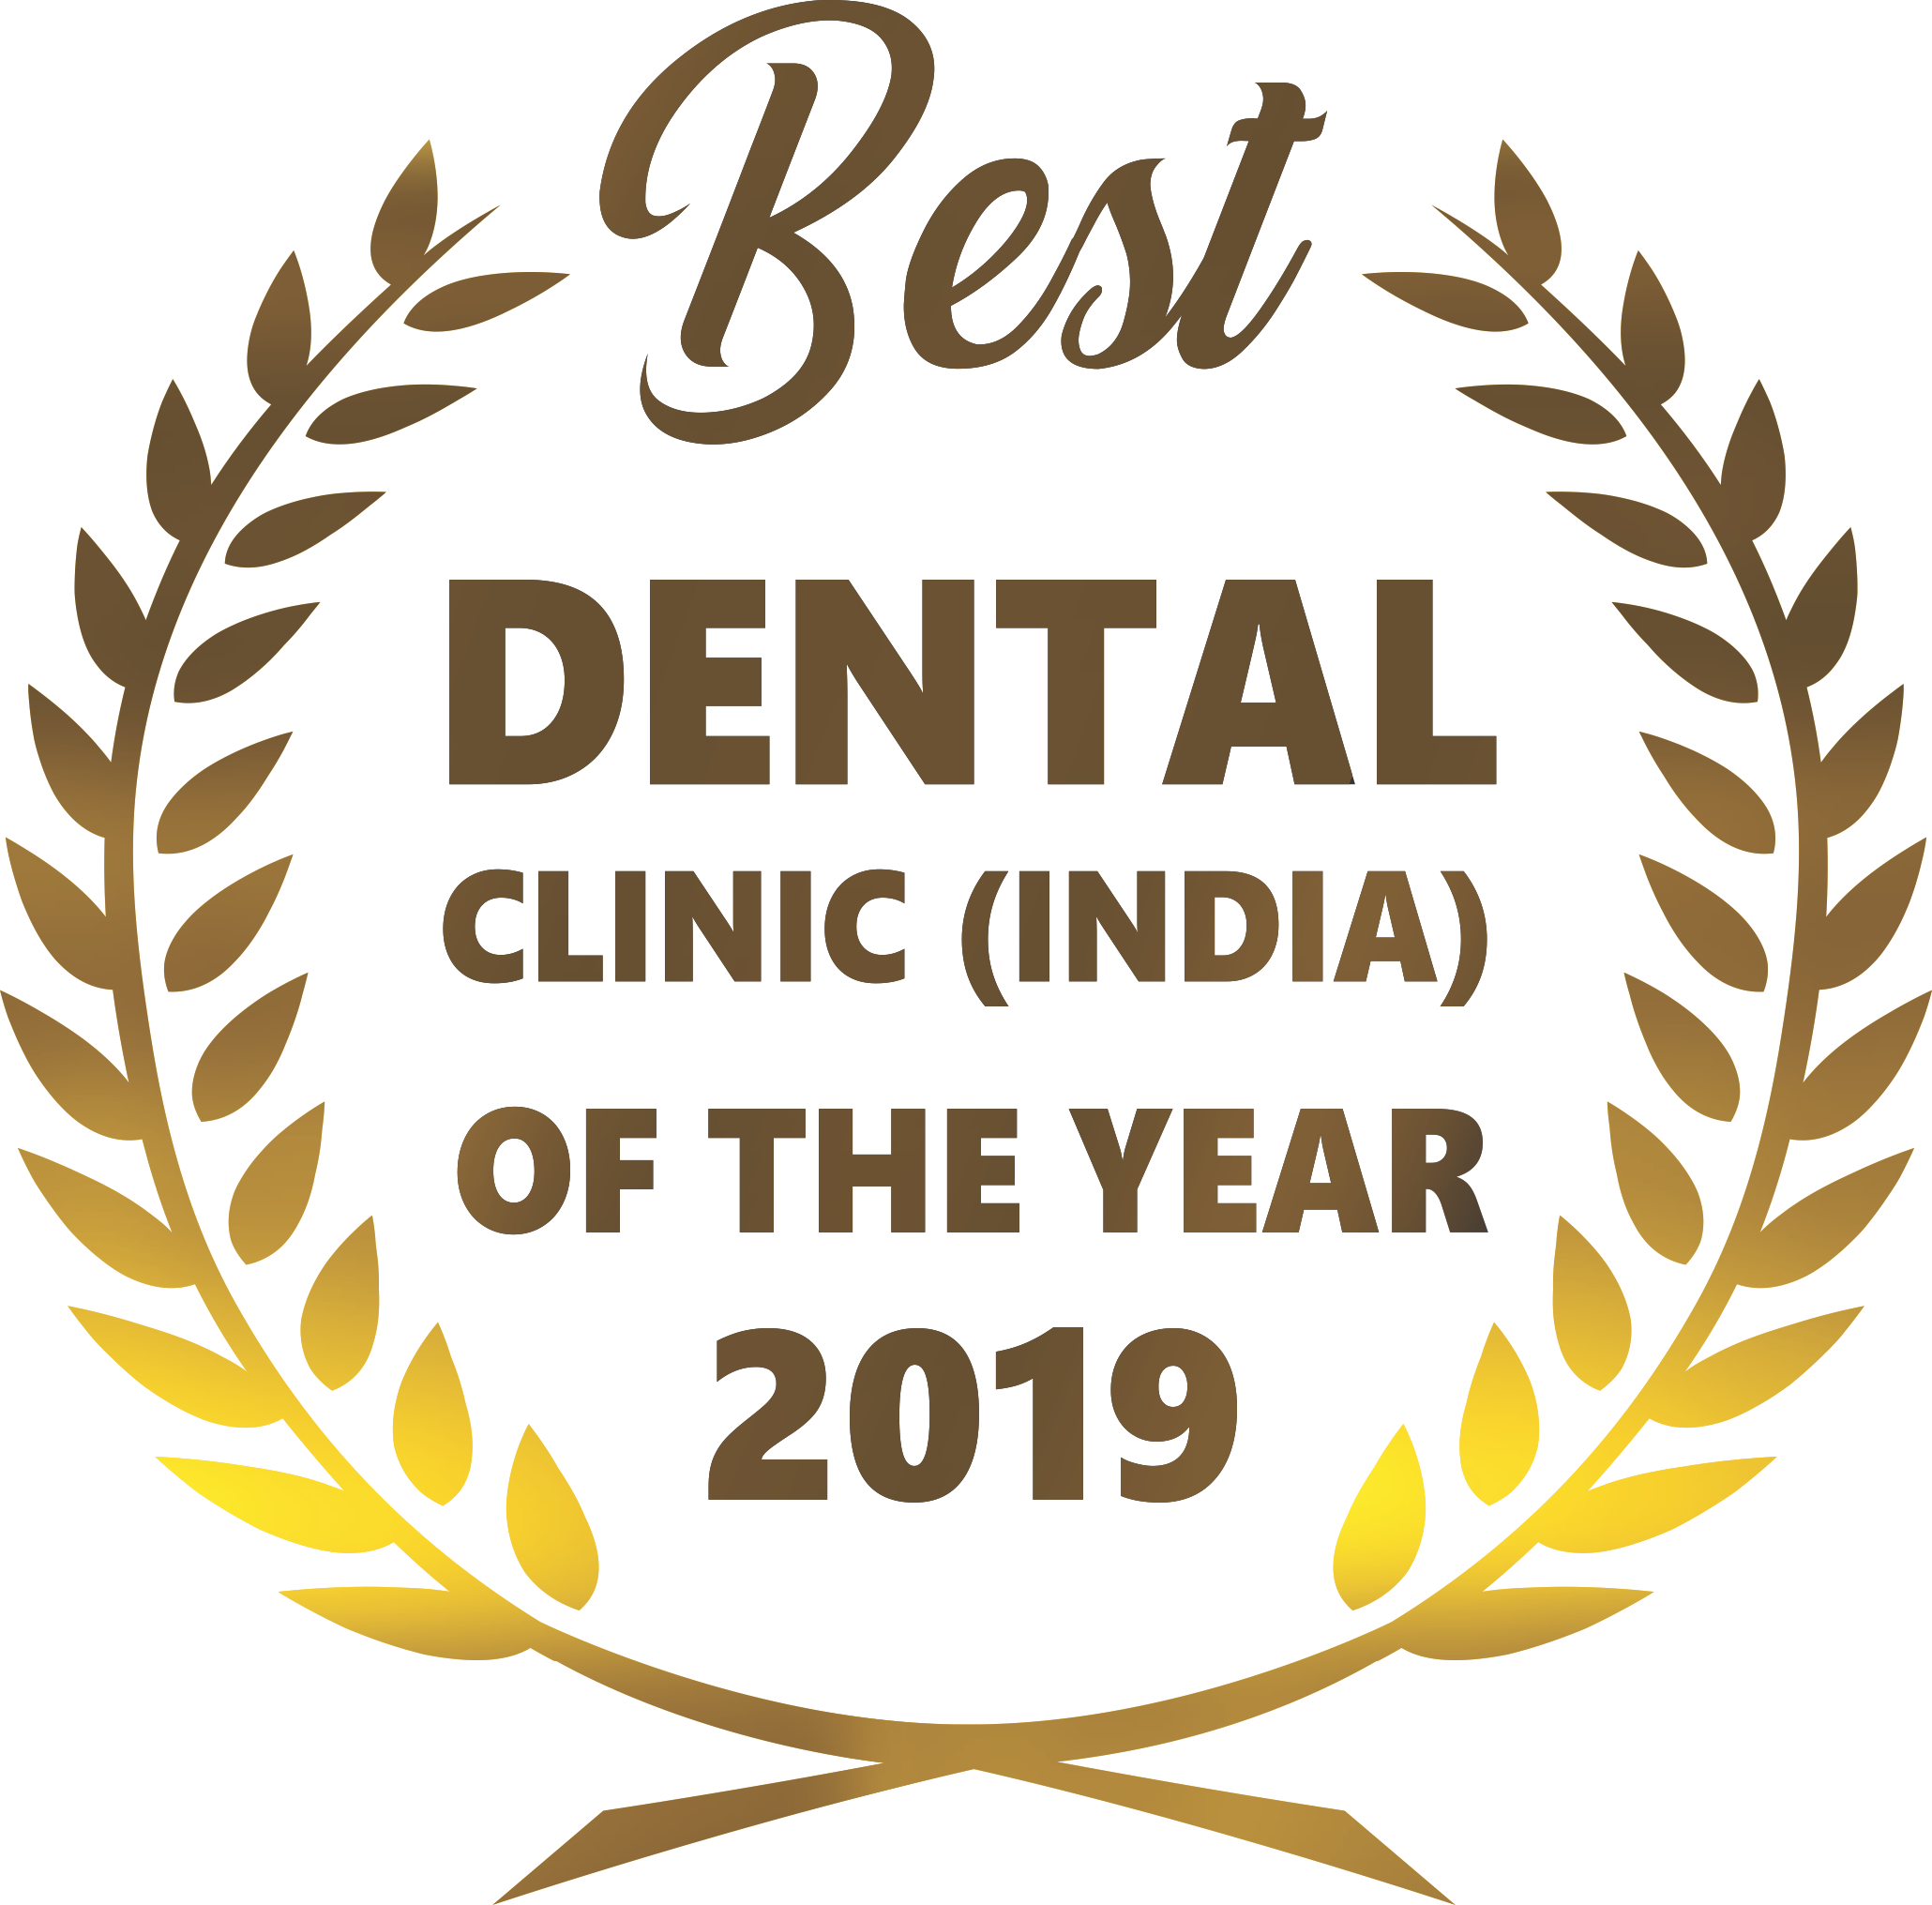 Dental implants in India